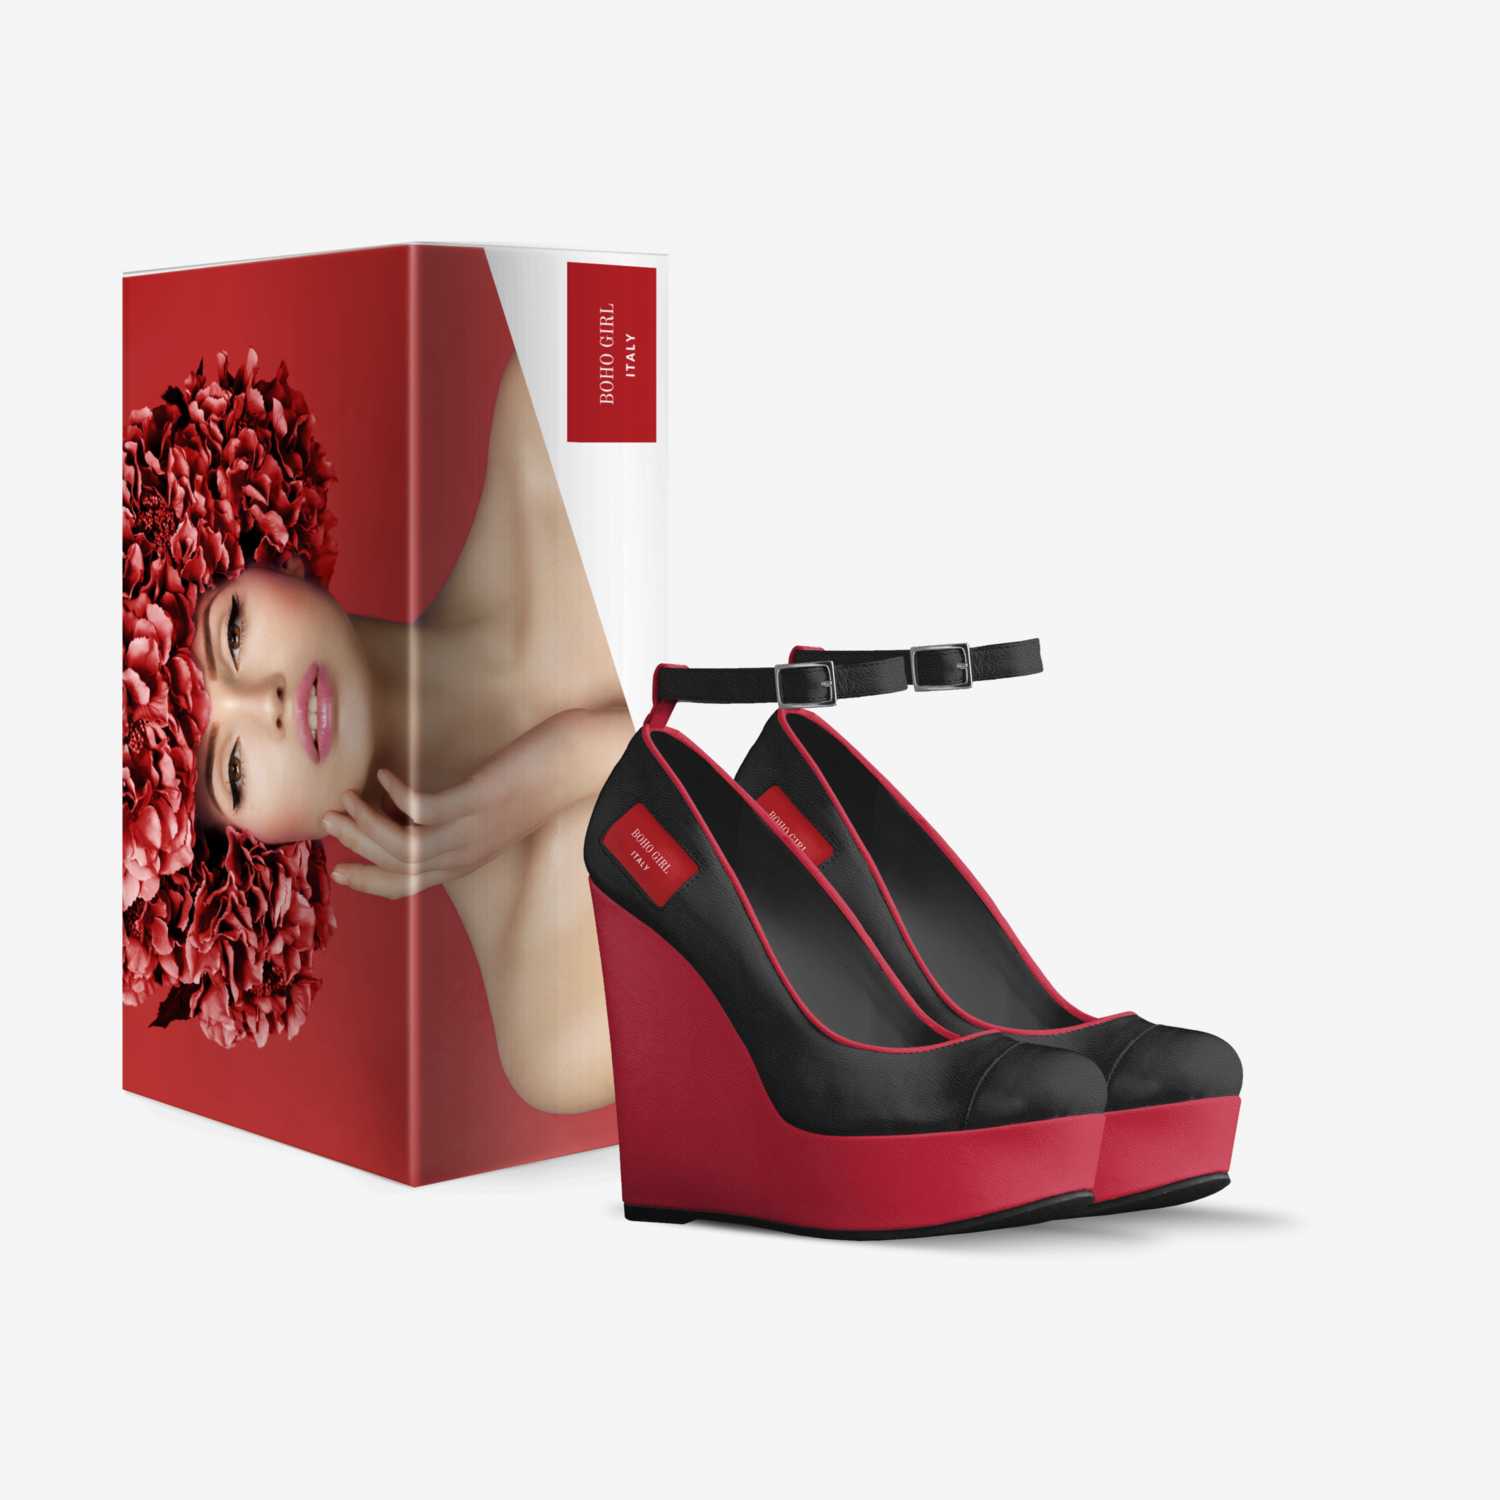 BOHO GIRL custom made in Italy shoes by Marijke Verkerk Design | Box view